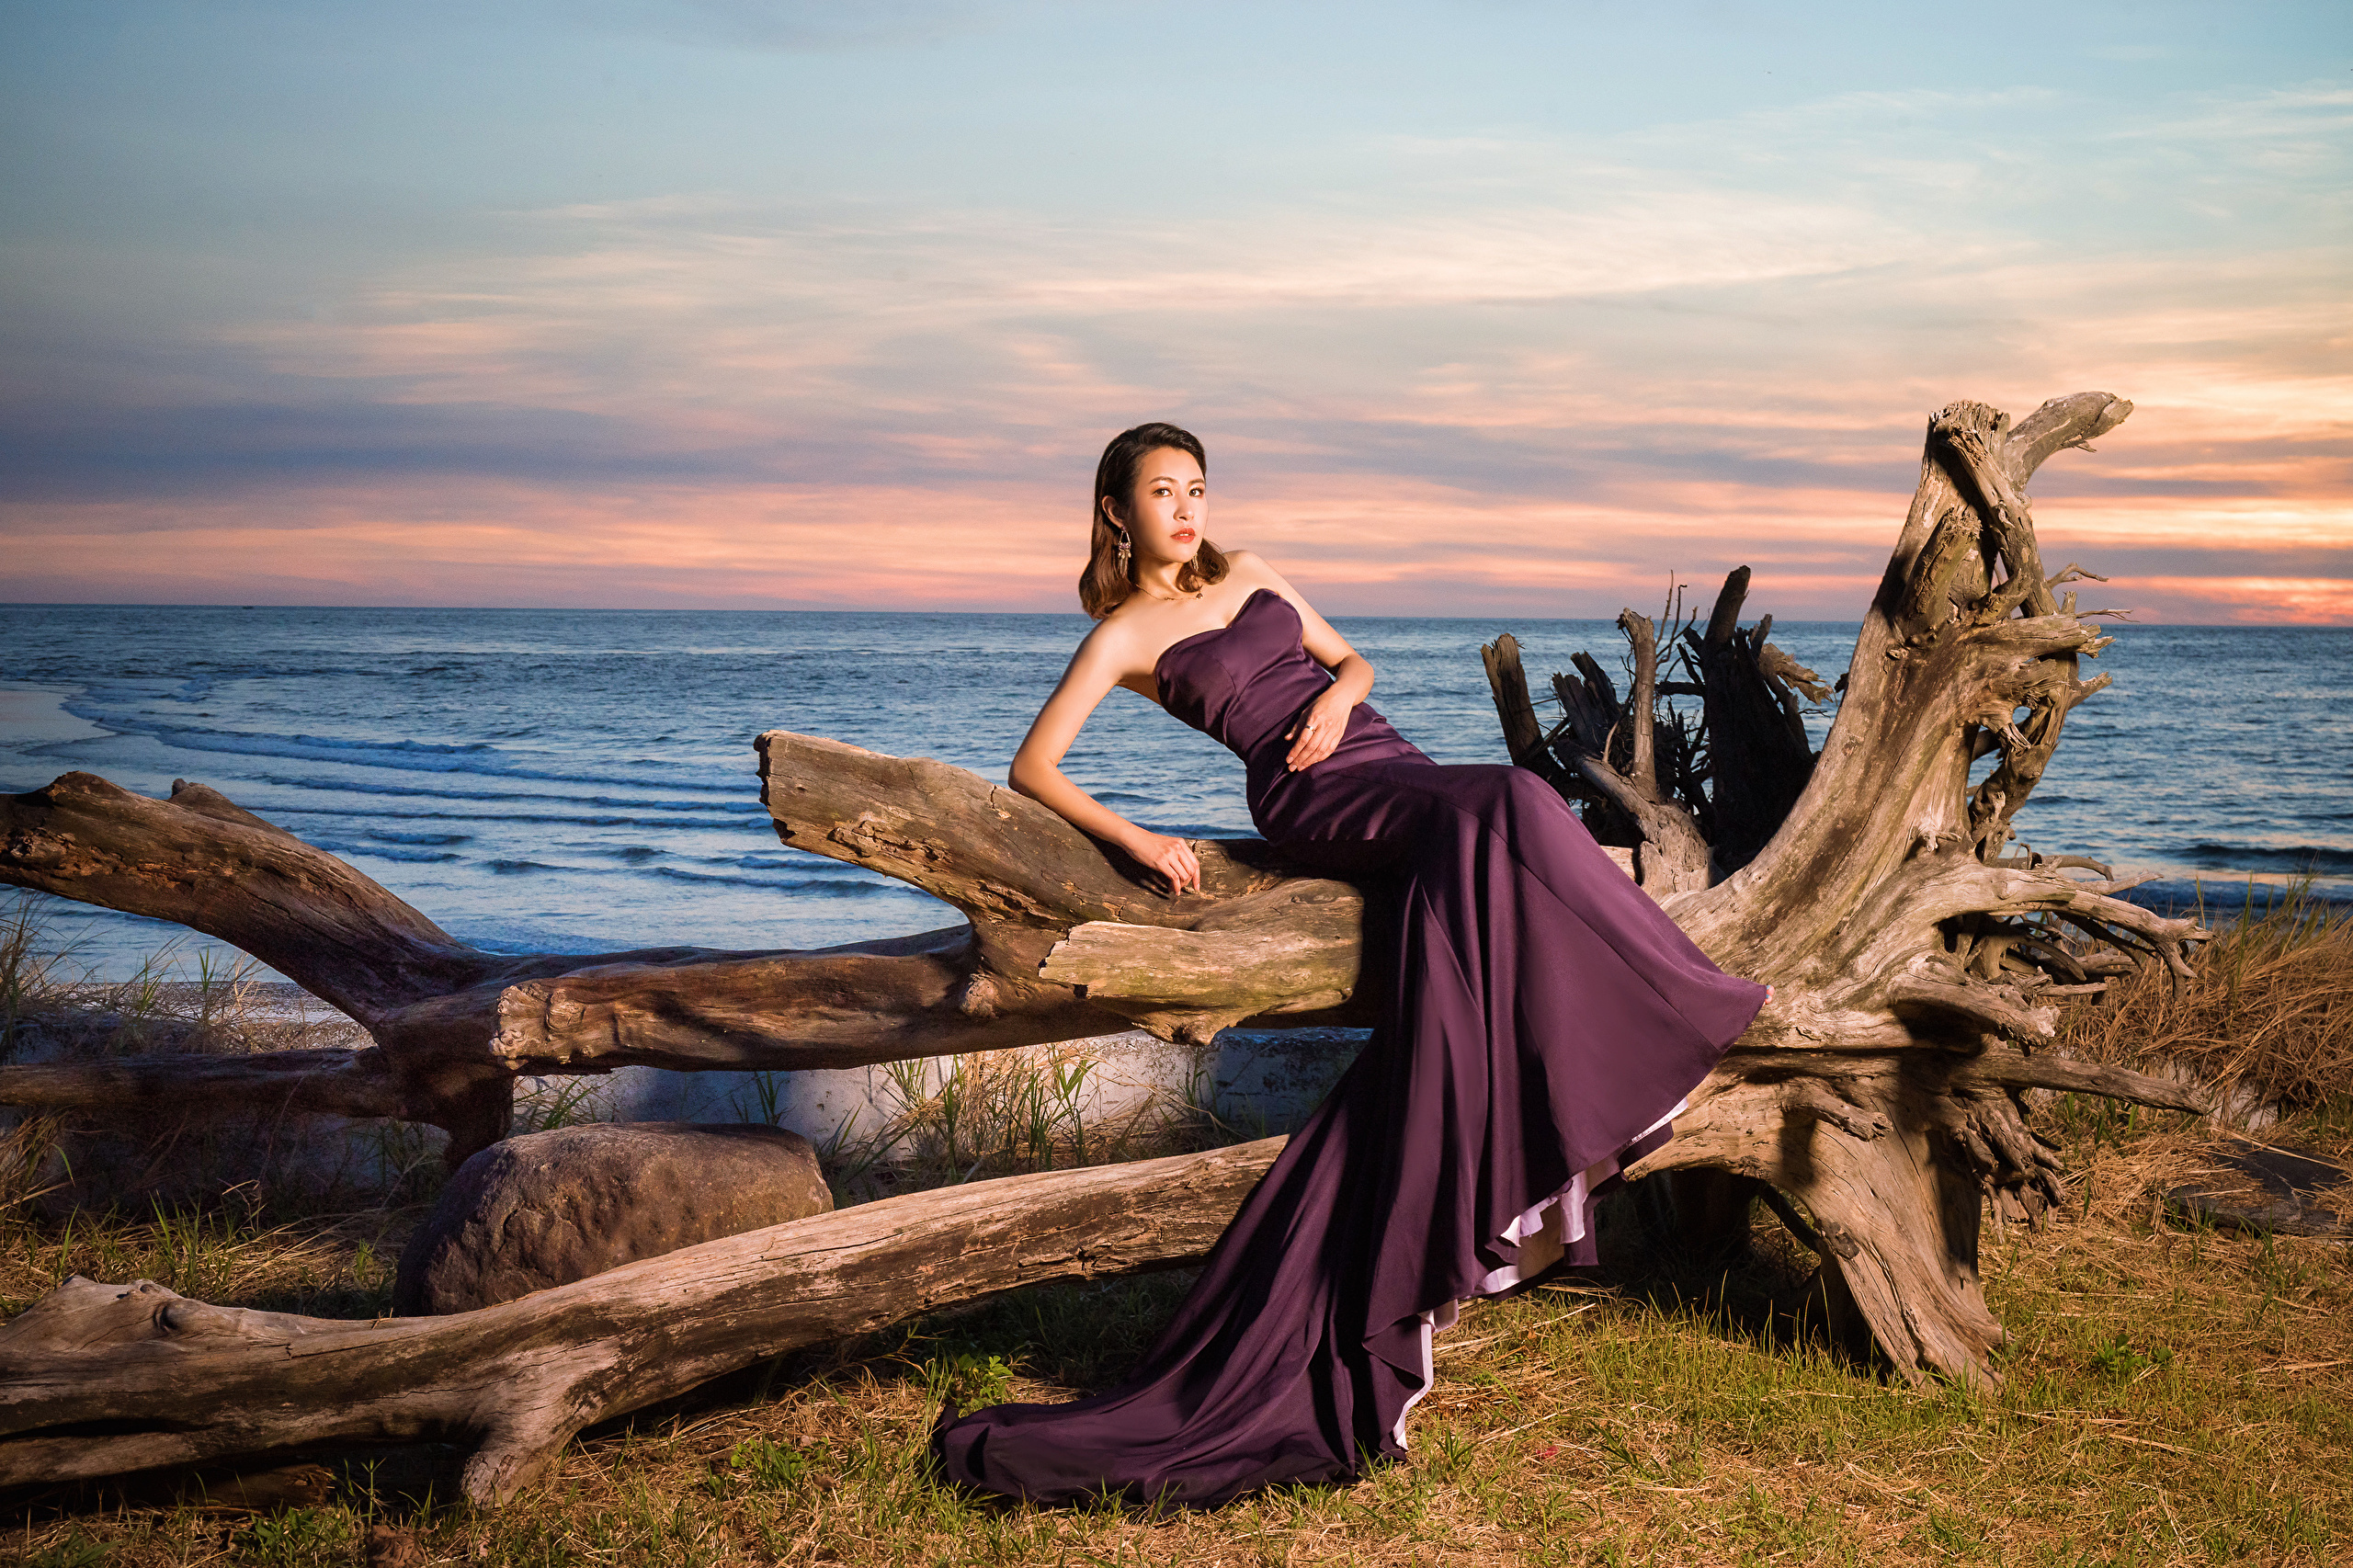 Asian Women Model Long Hair Brunette Ocean View Tree Stump Sitting Dress Beach 2560x1706